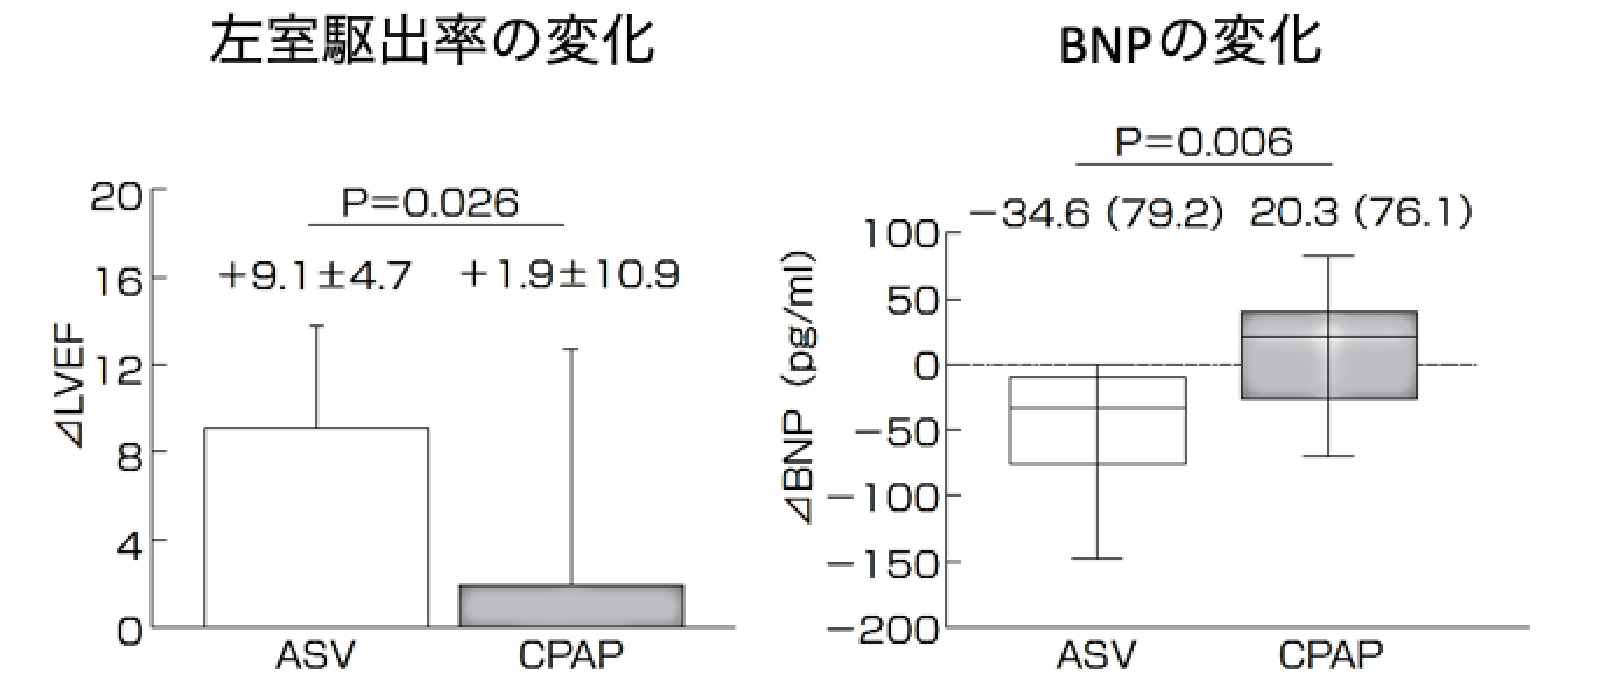 SAS合併心不全患者に対するASVとCPAPの効果の比較